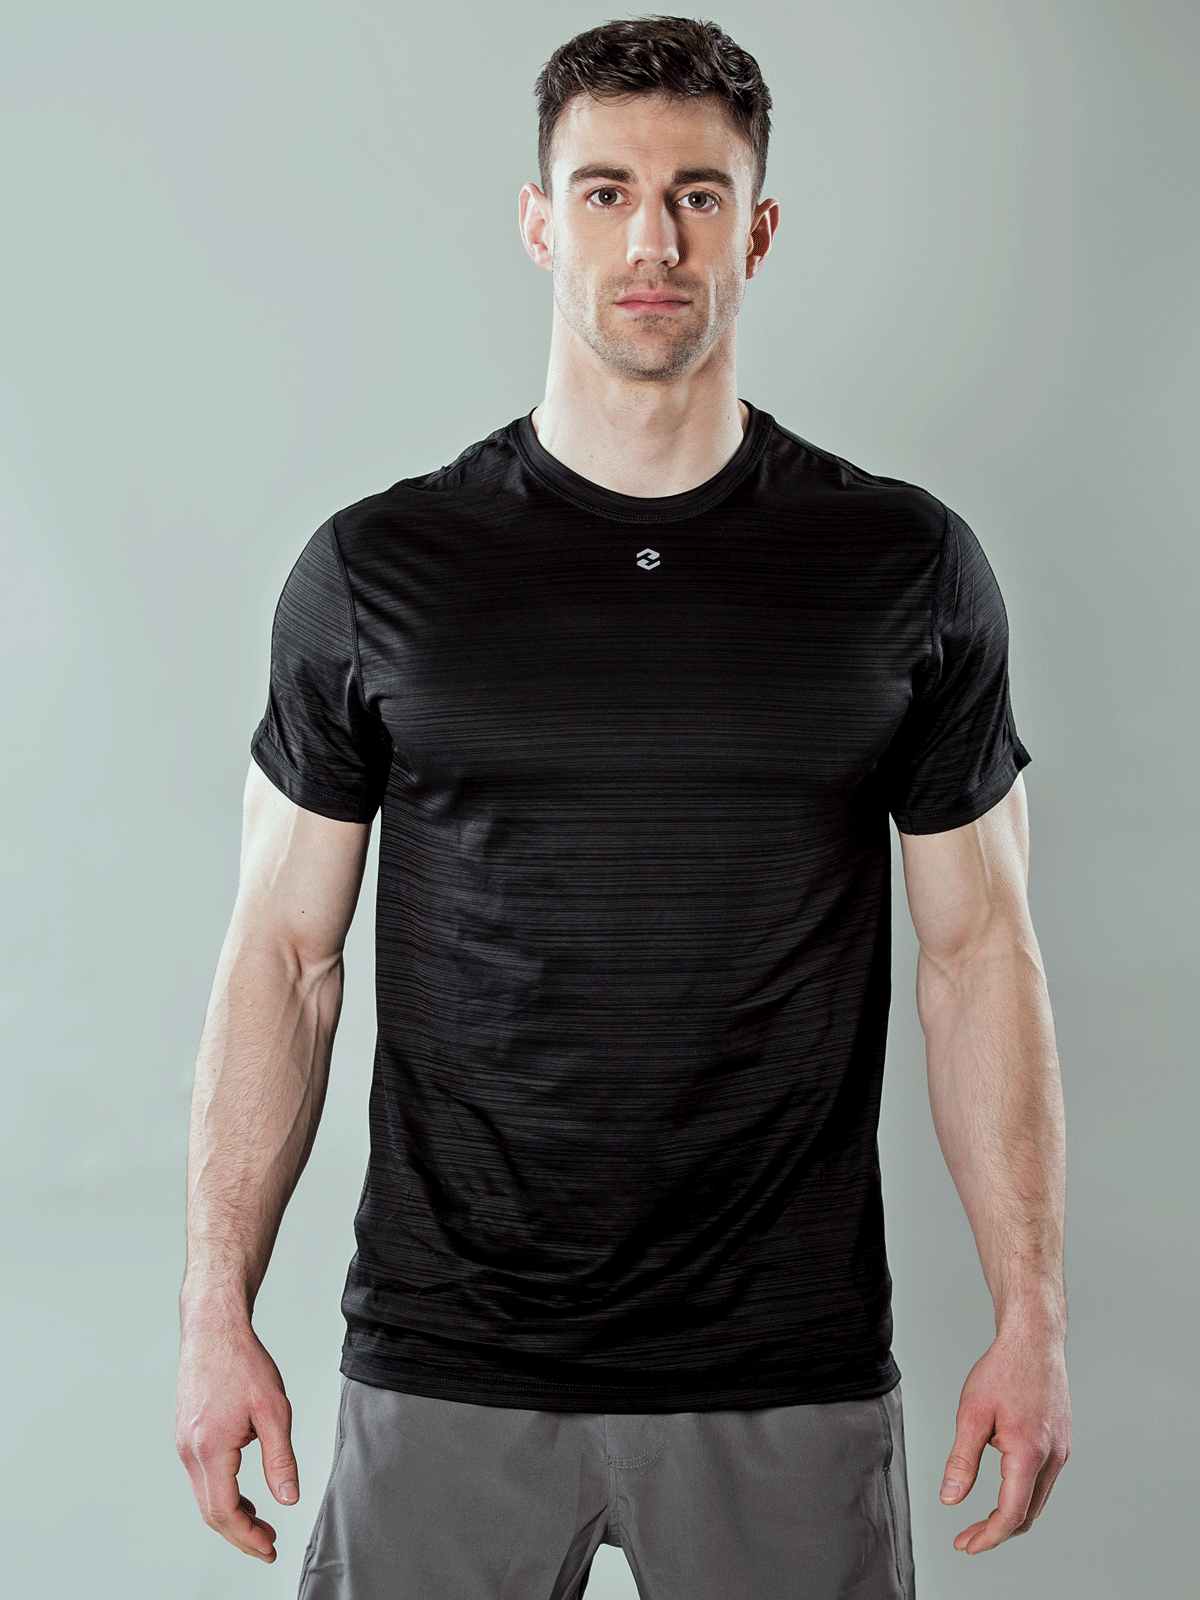 Xenon Black T-Shirt